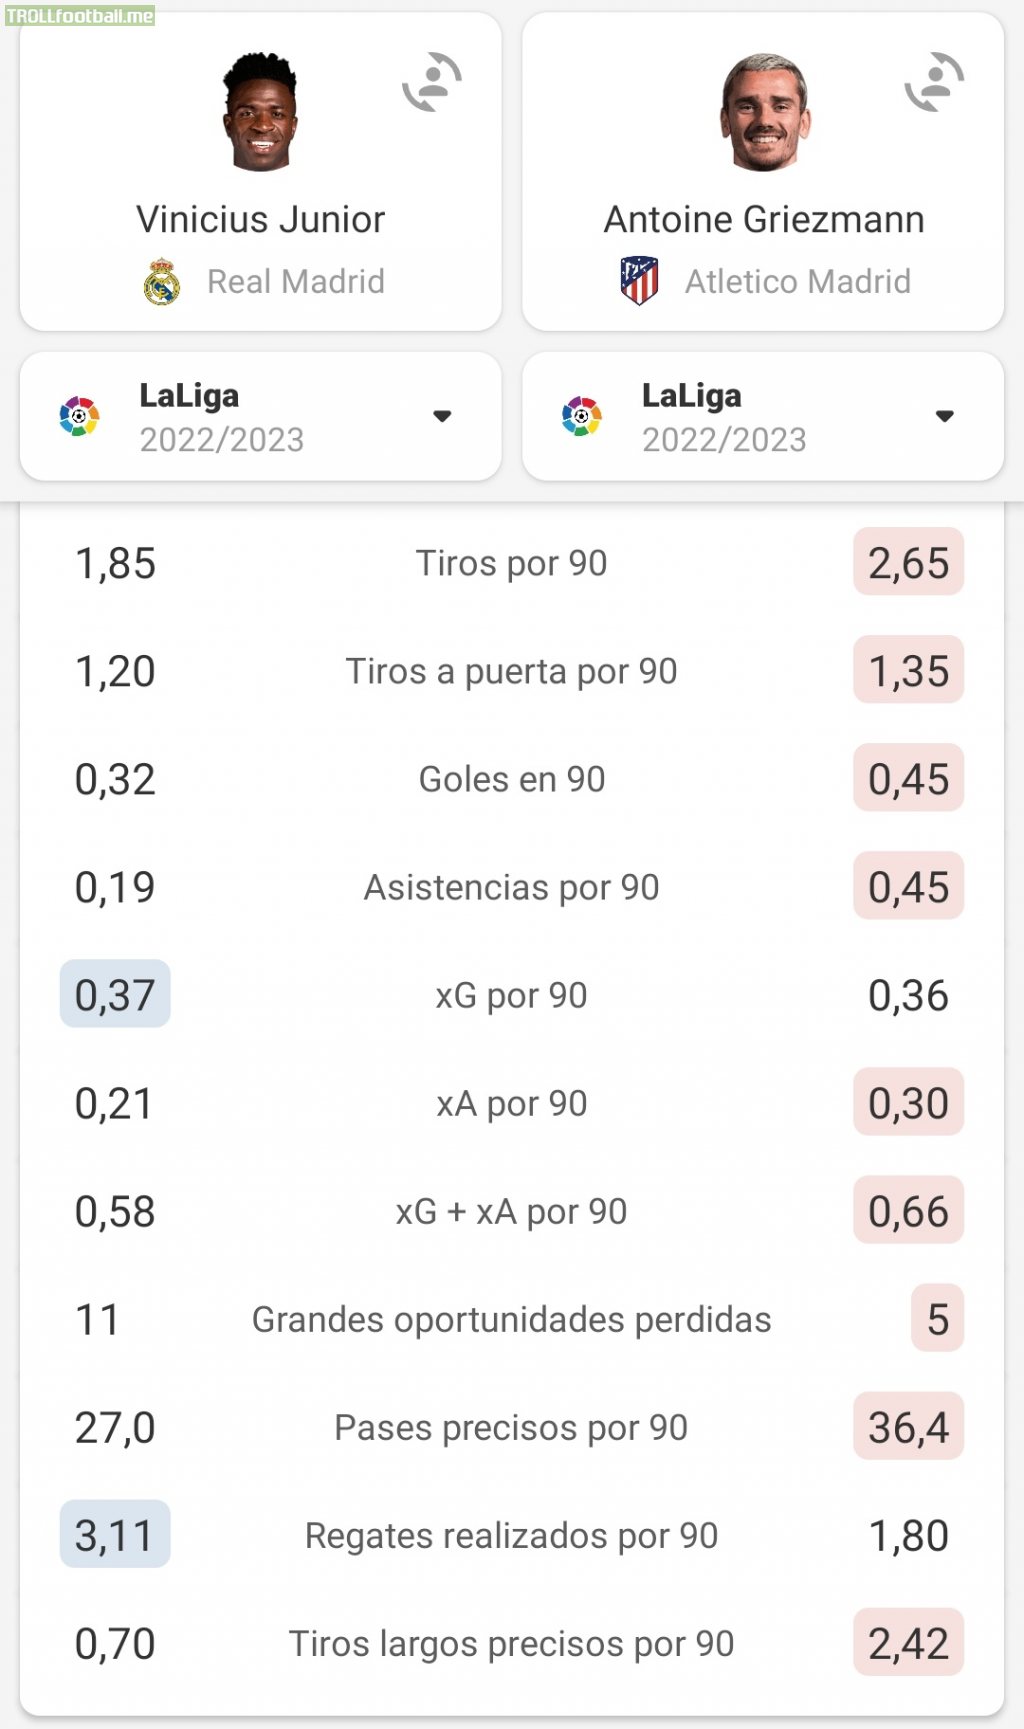 Performance comparison between Vinicius Junior and Antoine Griezmann in La Liga this season